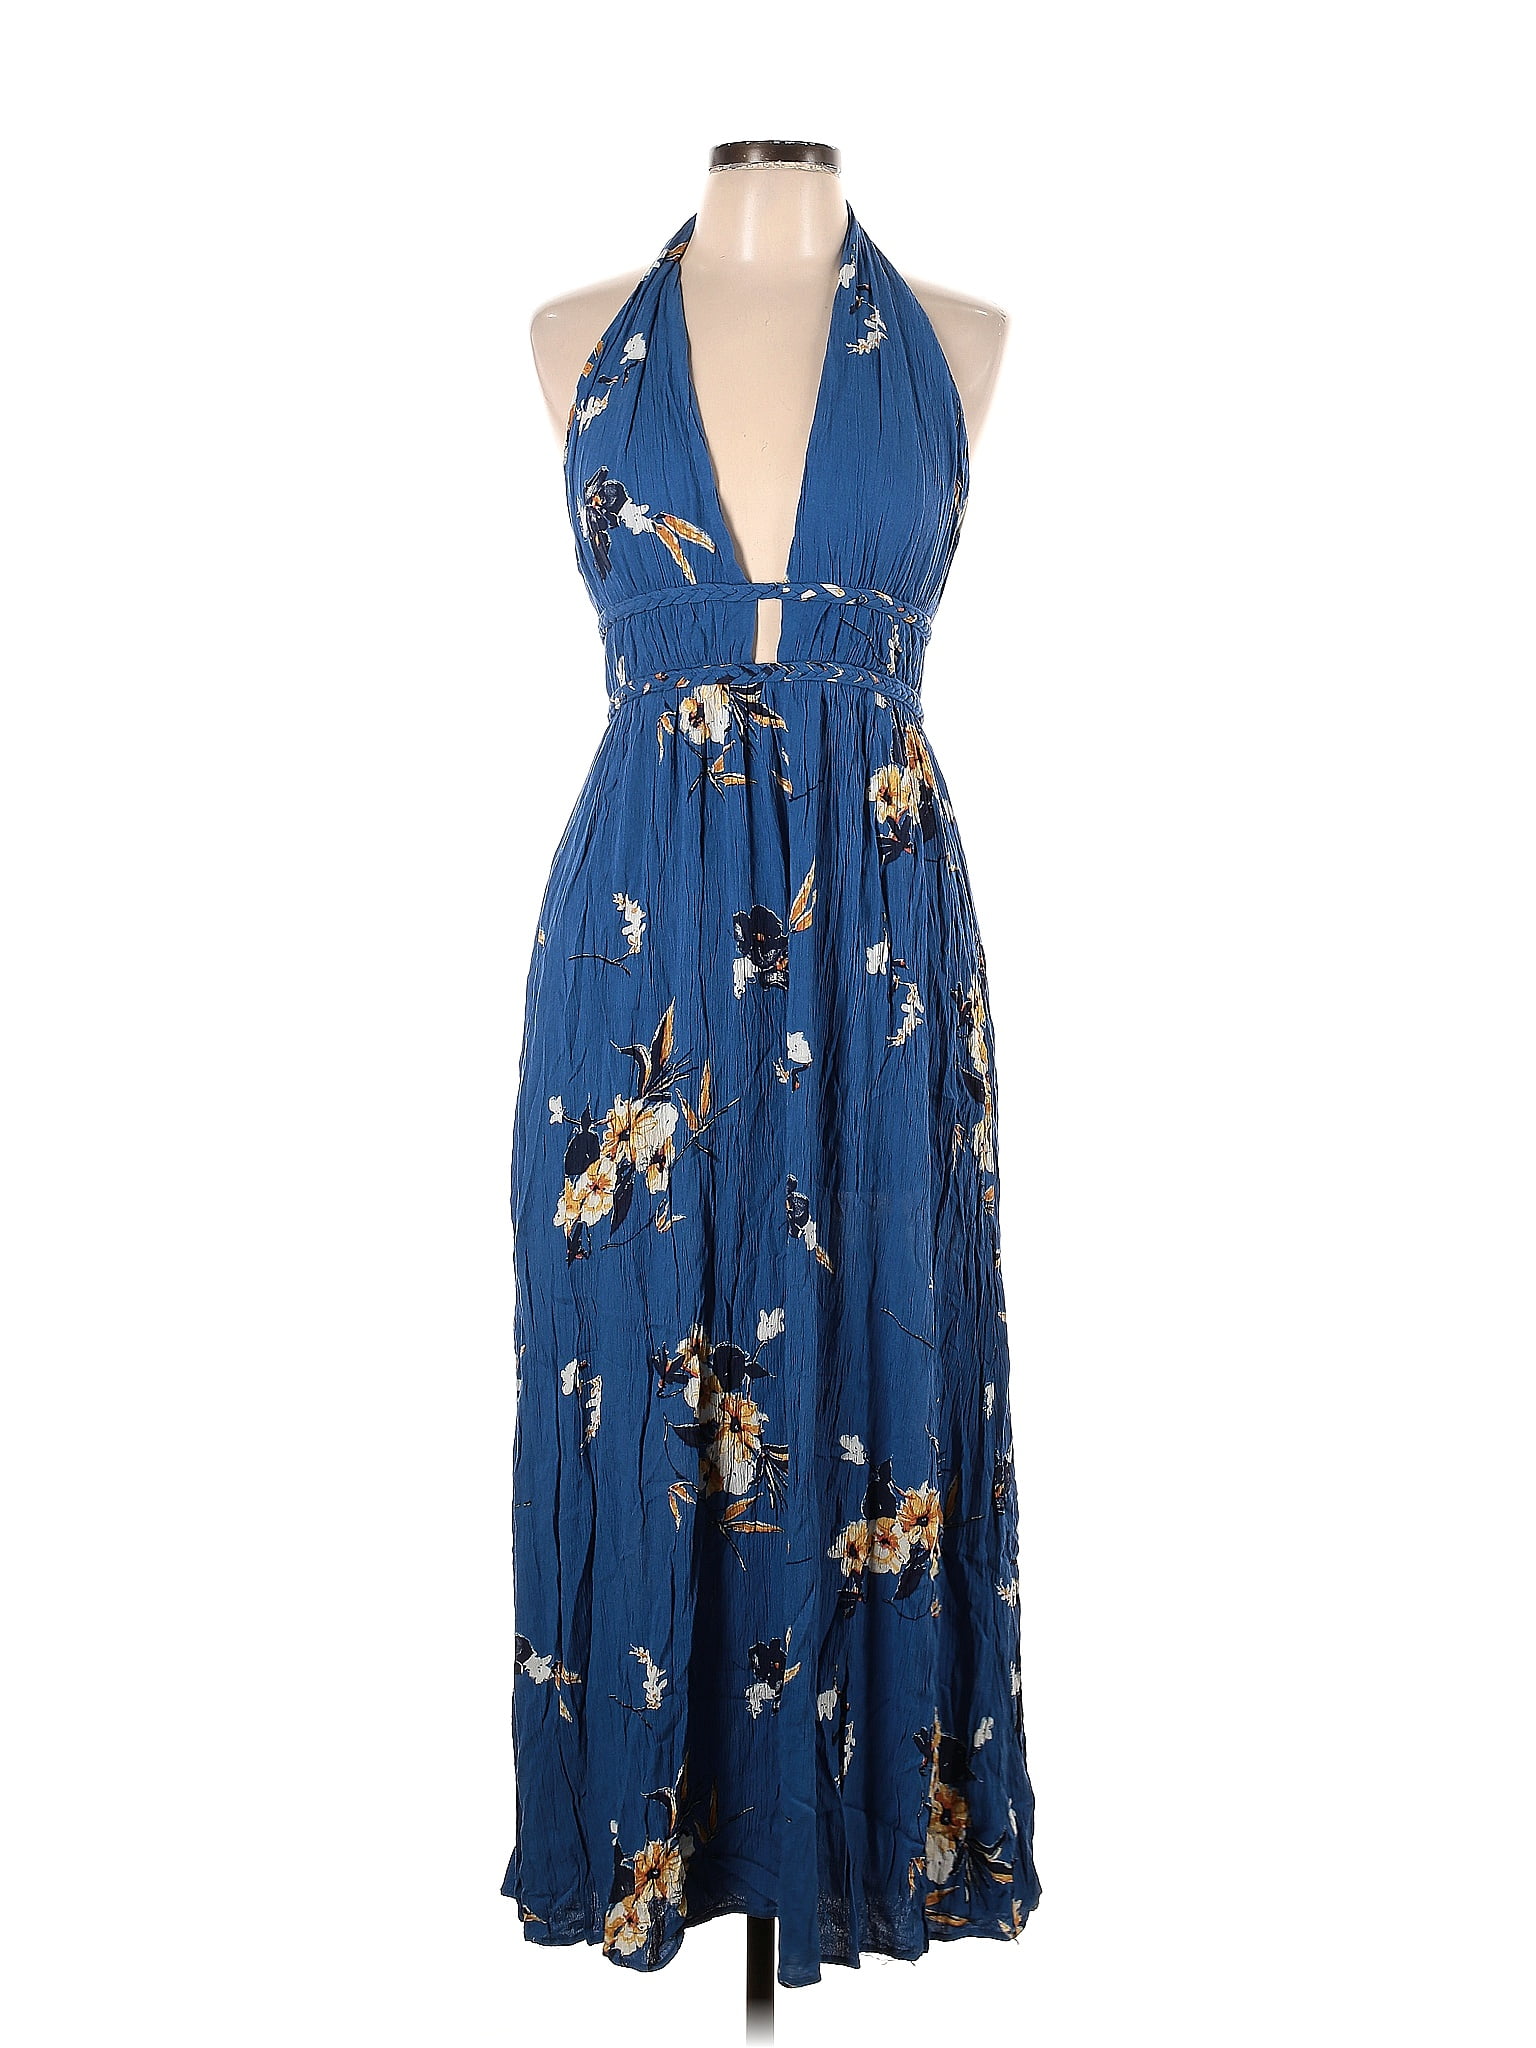 Illa Illa Floral Blue Casual Dress Size L - 45% off | thredUP